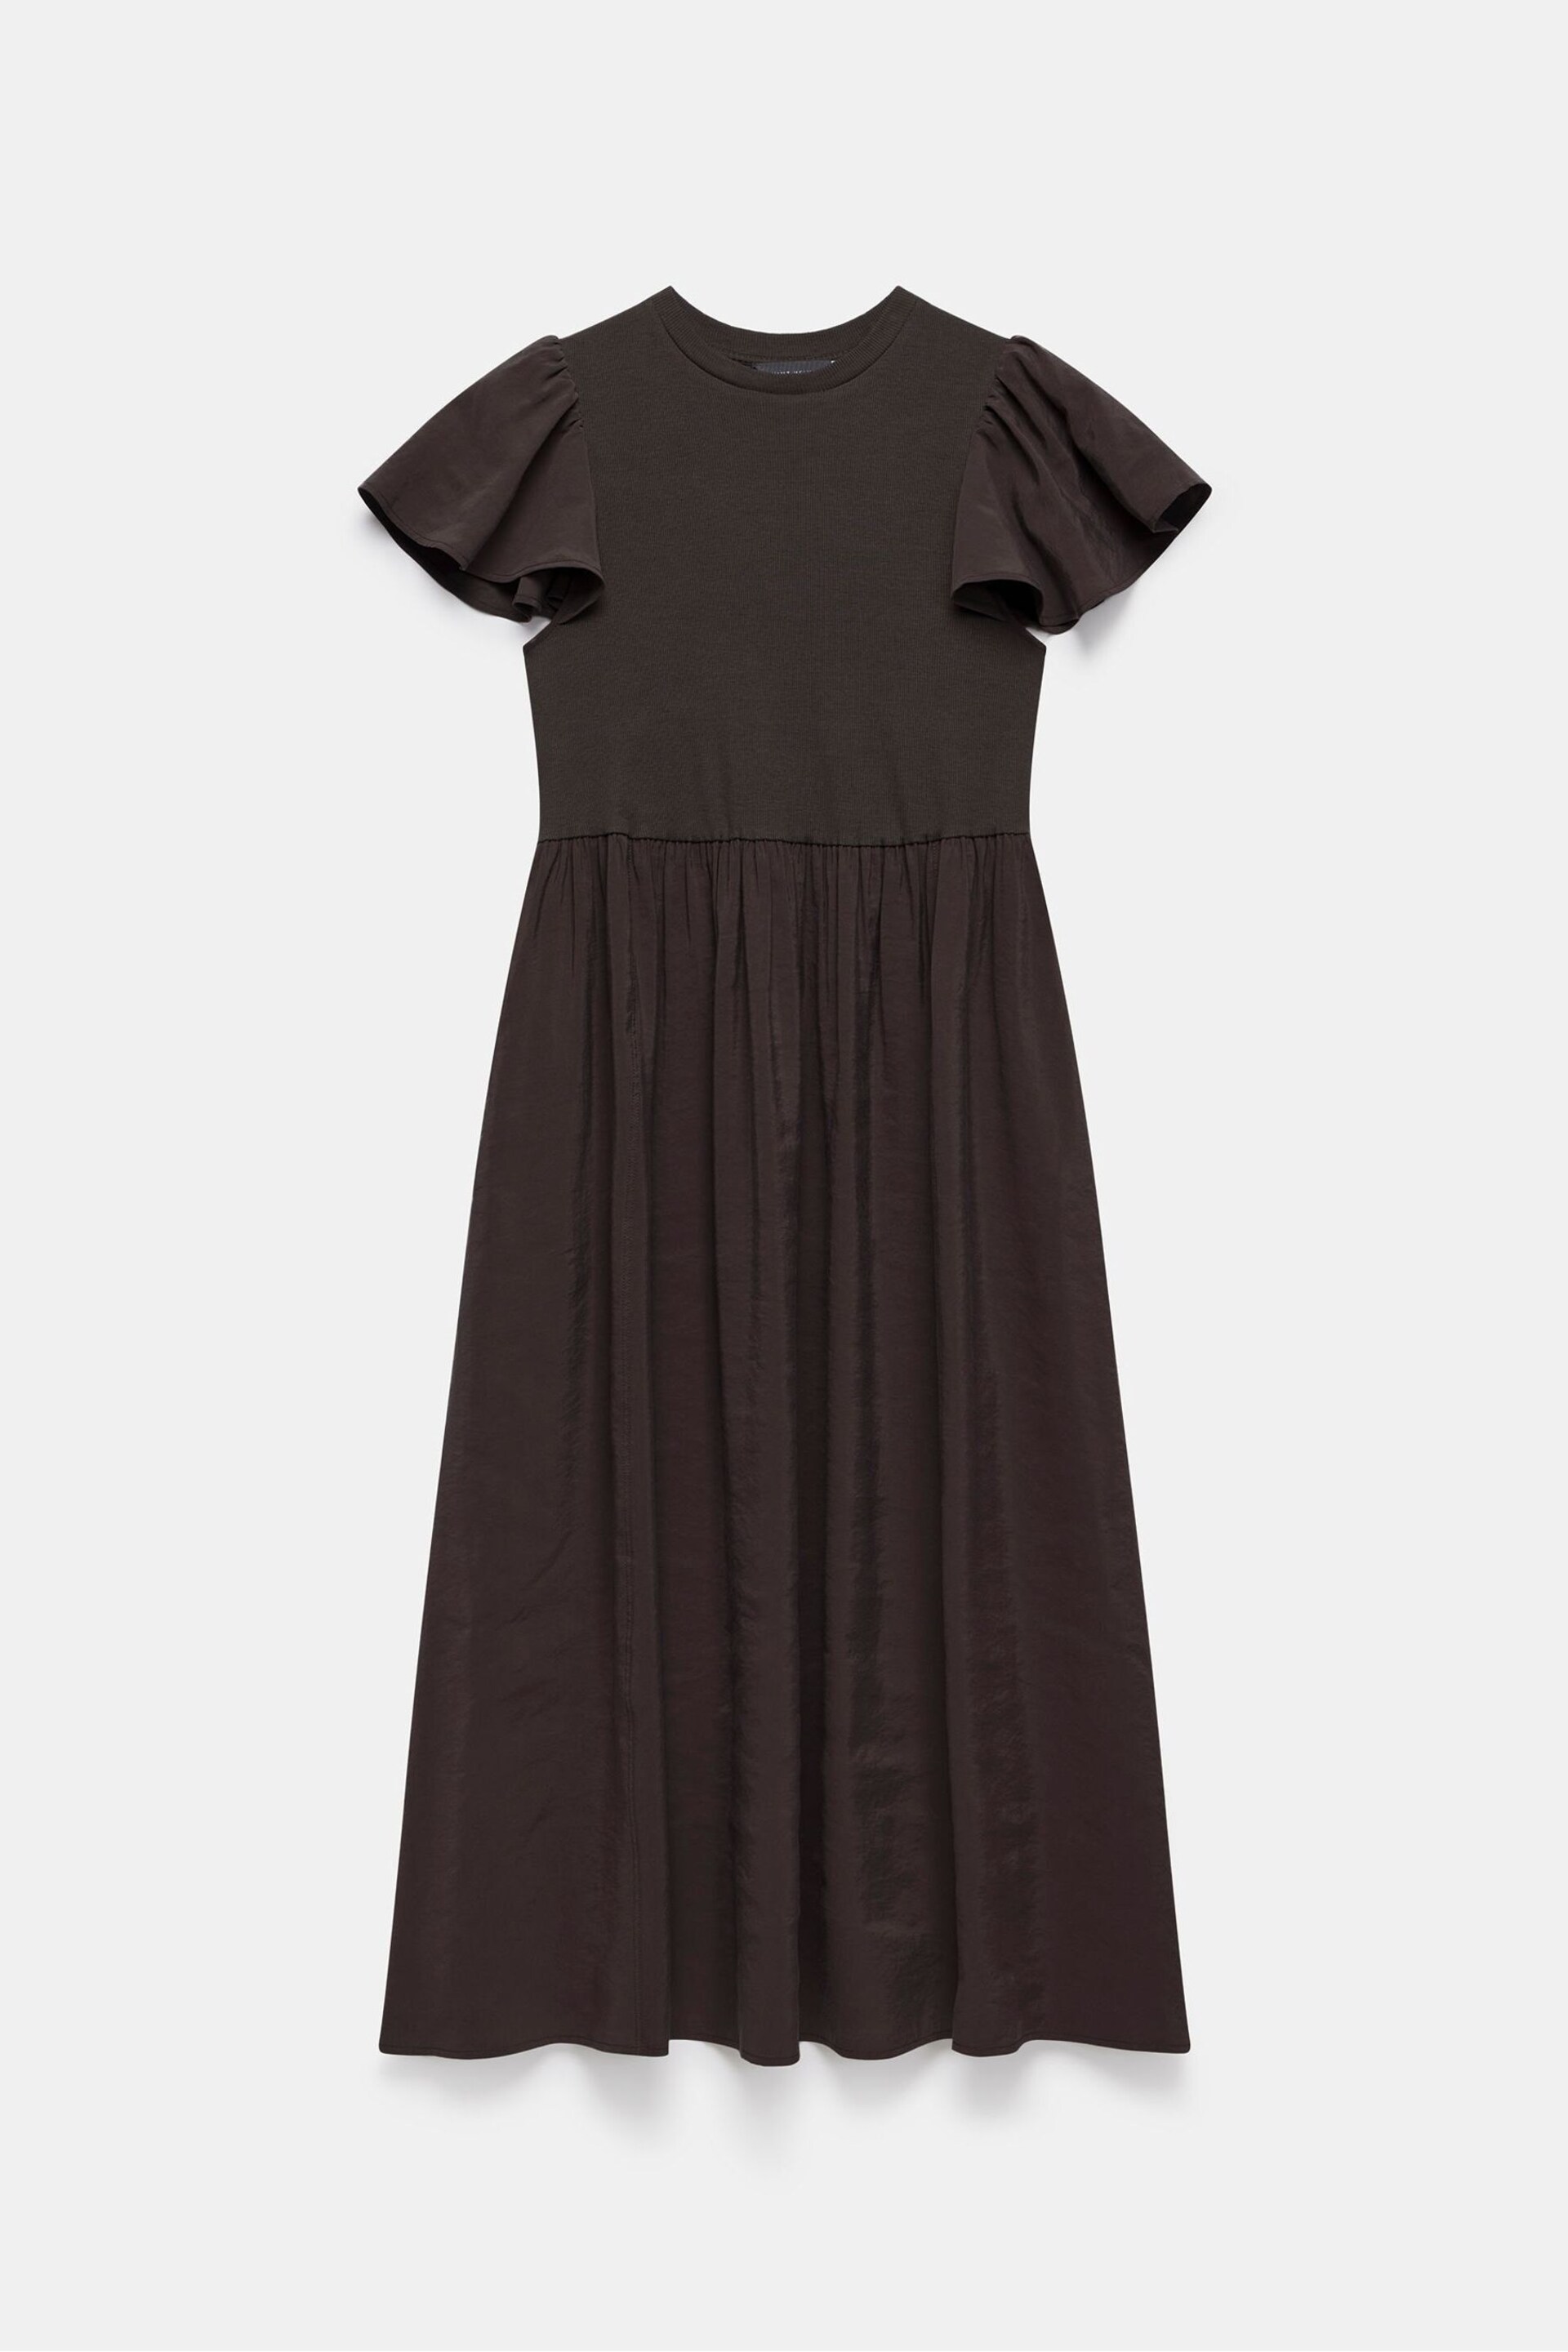 Mint Velvet Brown Jersey Ruffle Midi Dress - Image 2 of 3